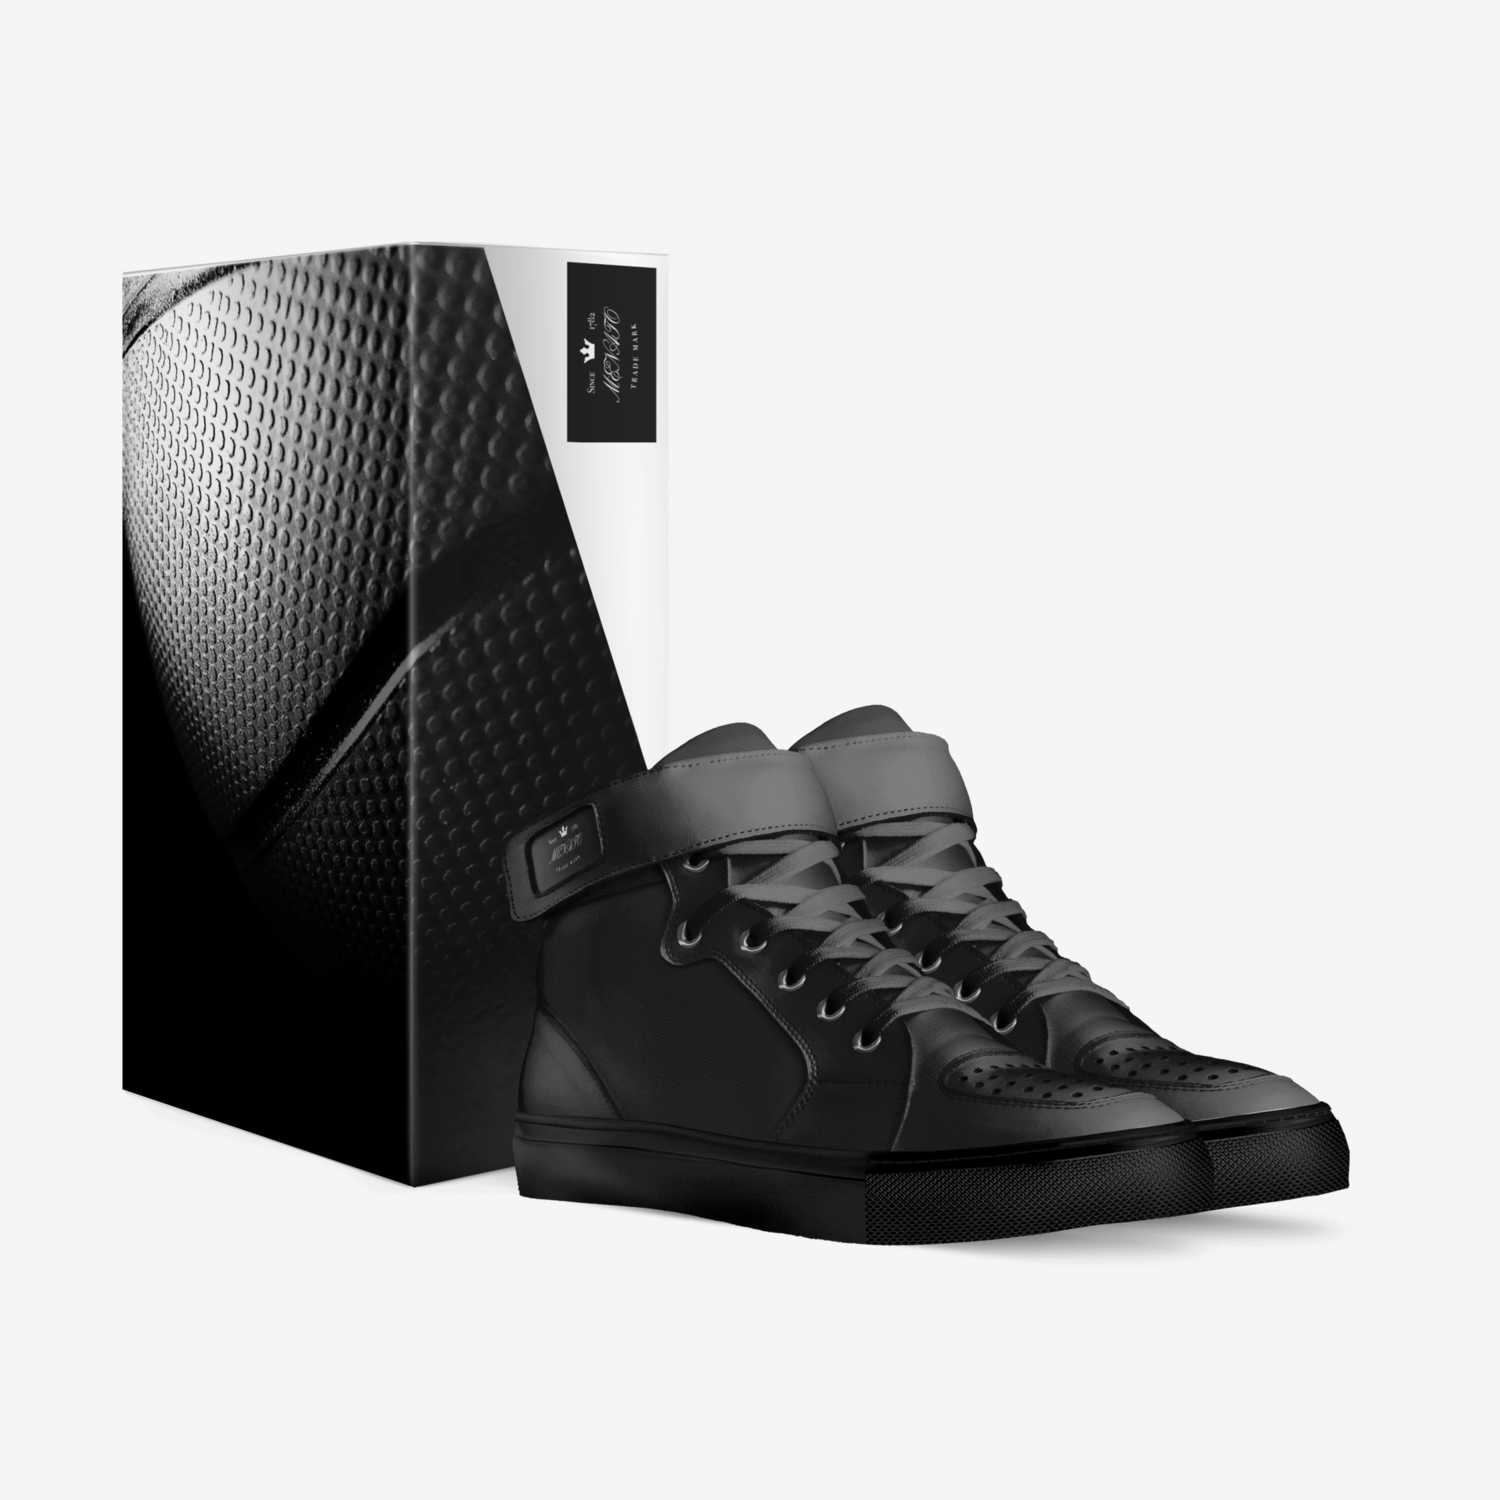 MENATO custom made in Italy shoes by Alessandro Menato | Box view